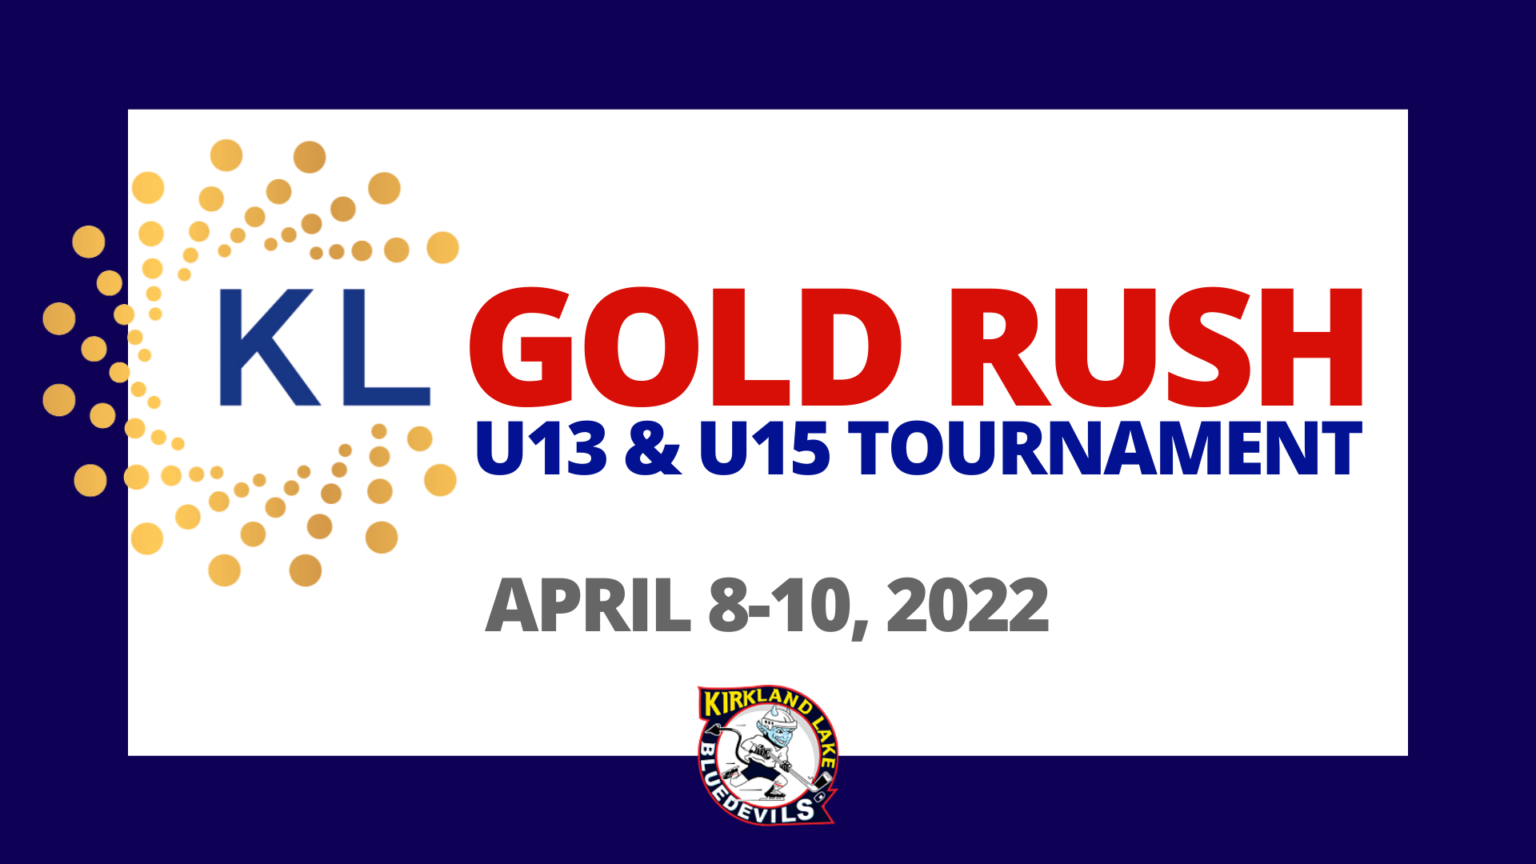 KL Gold Rush Tournament Kirkland Lake Minor Hockey Association